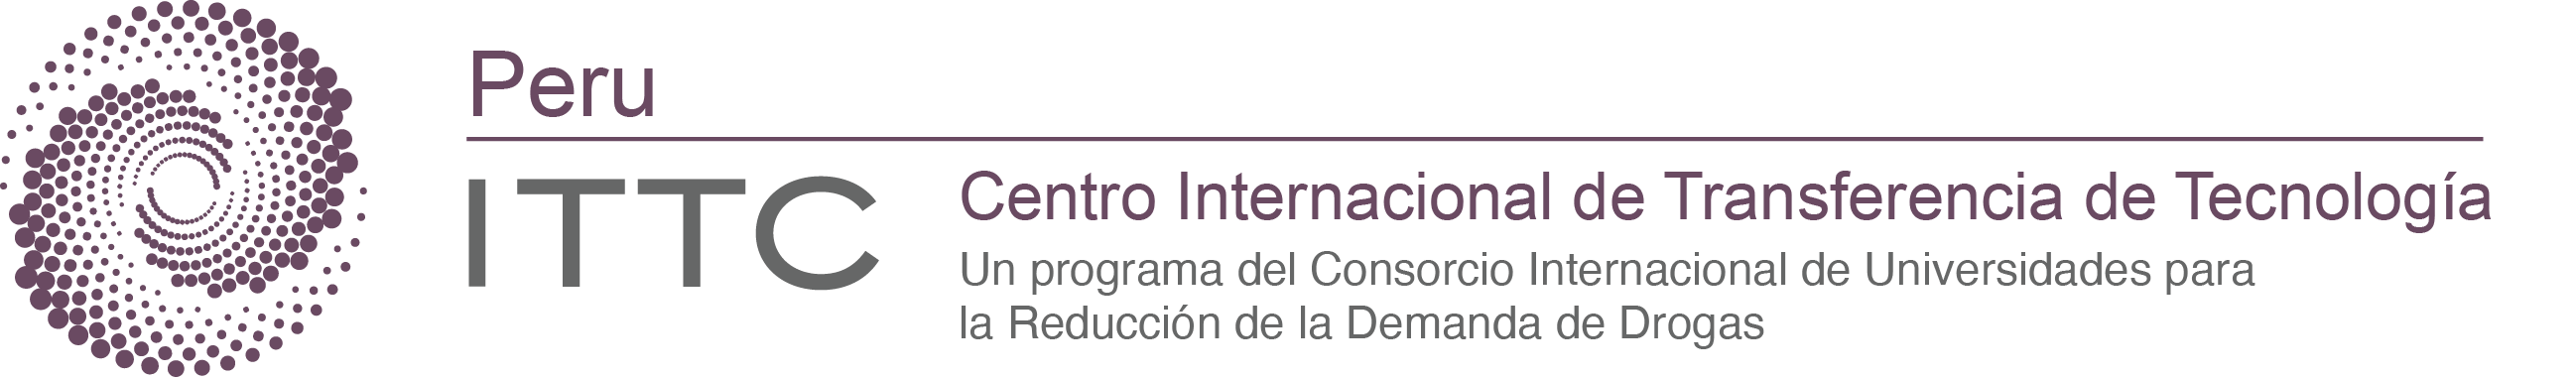 Peru International Technology Transfer Center Logo